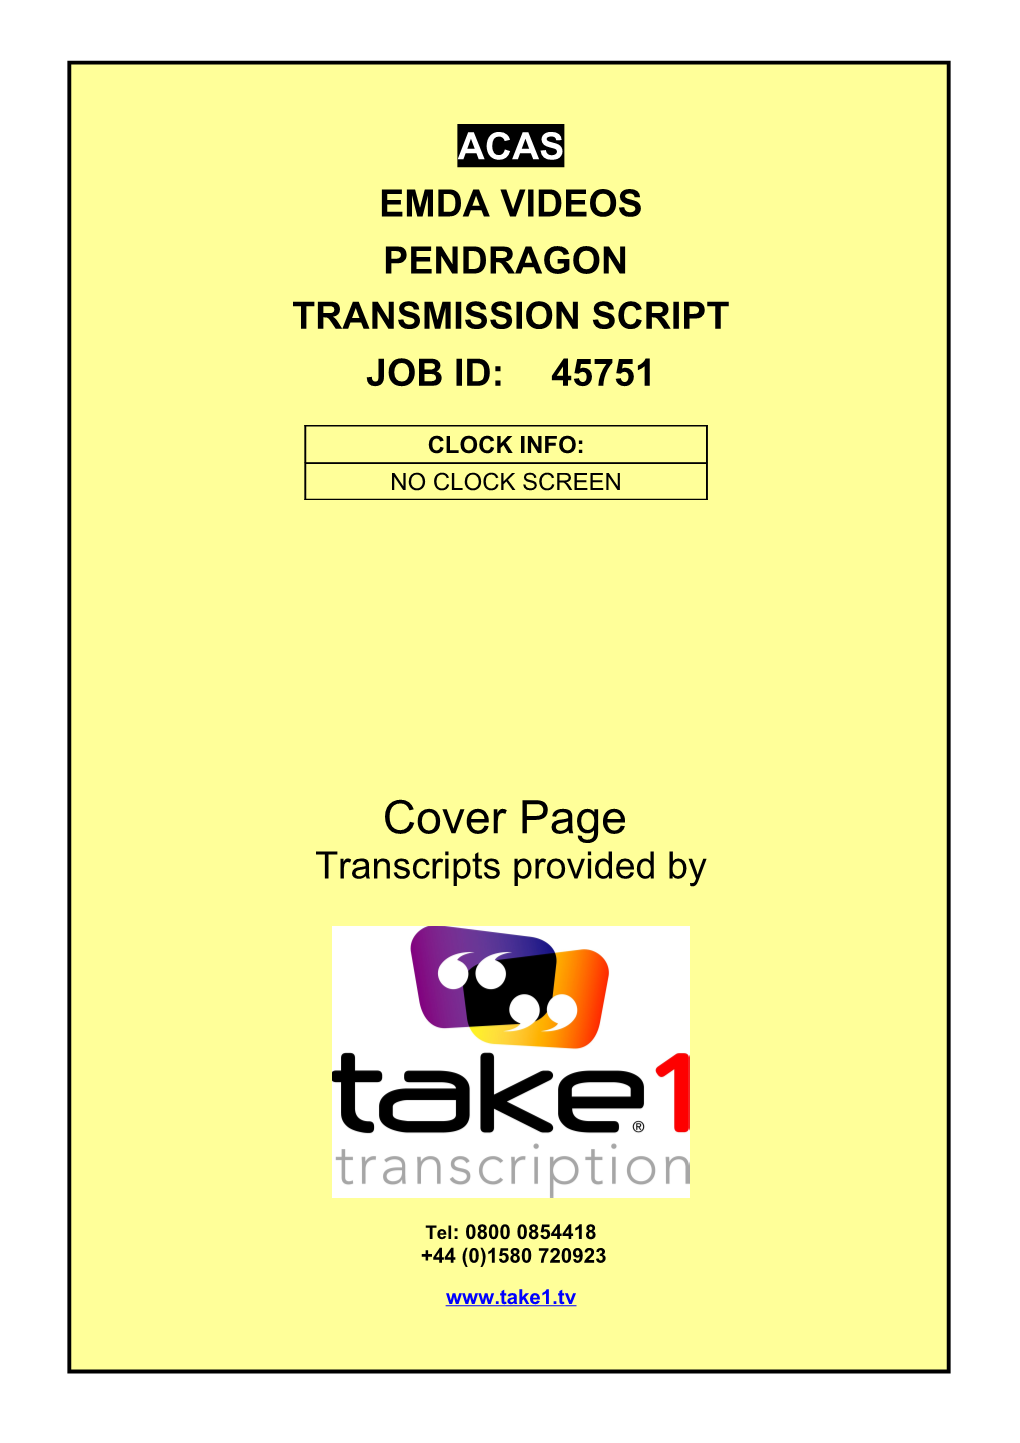 Transmission Script